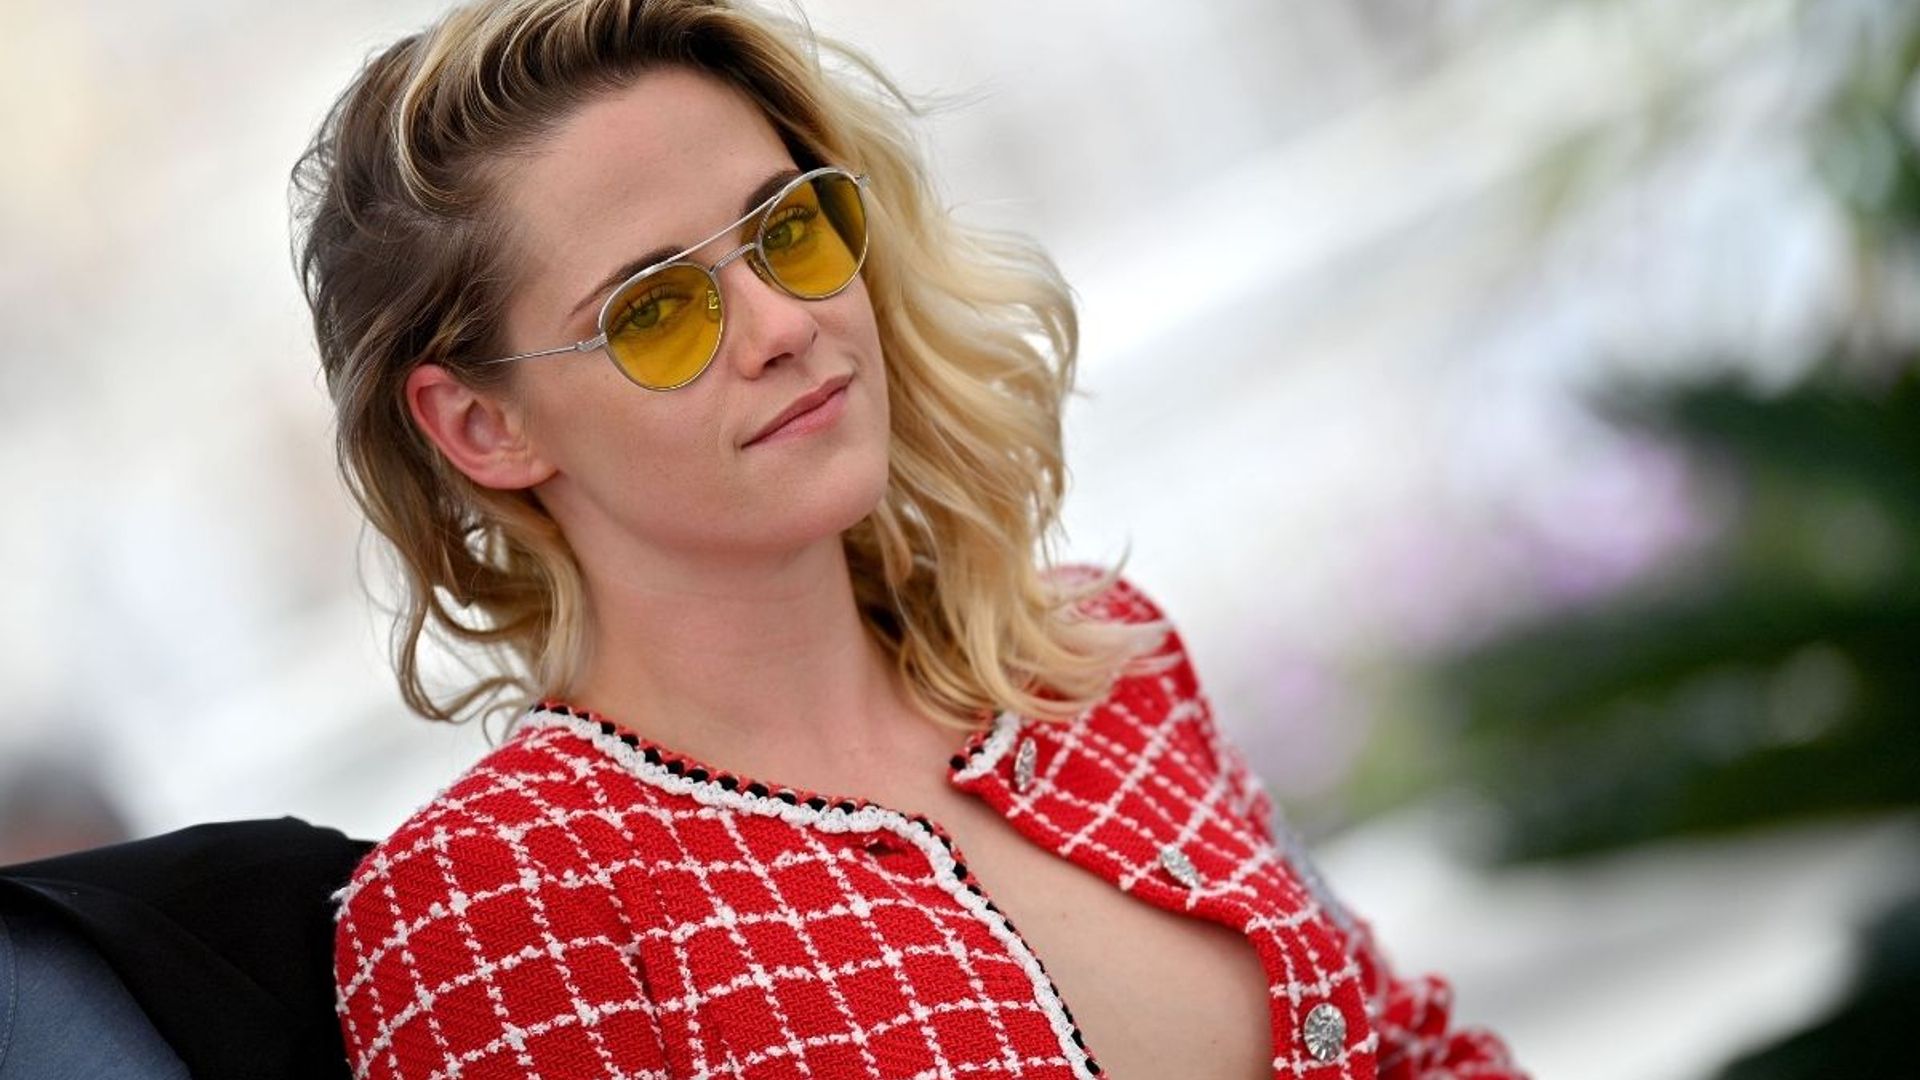 Cannes Film Festival 2022: Kristen Stewart in Chanel at THE